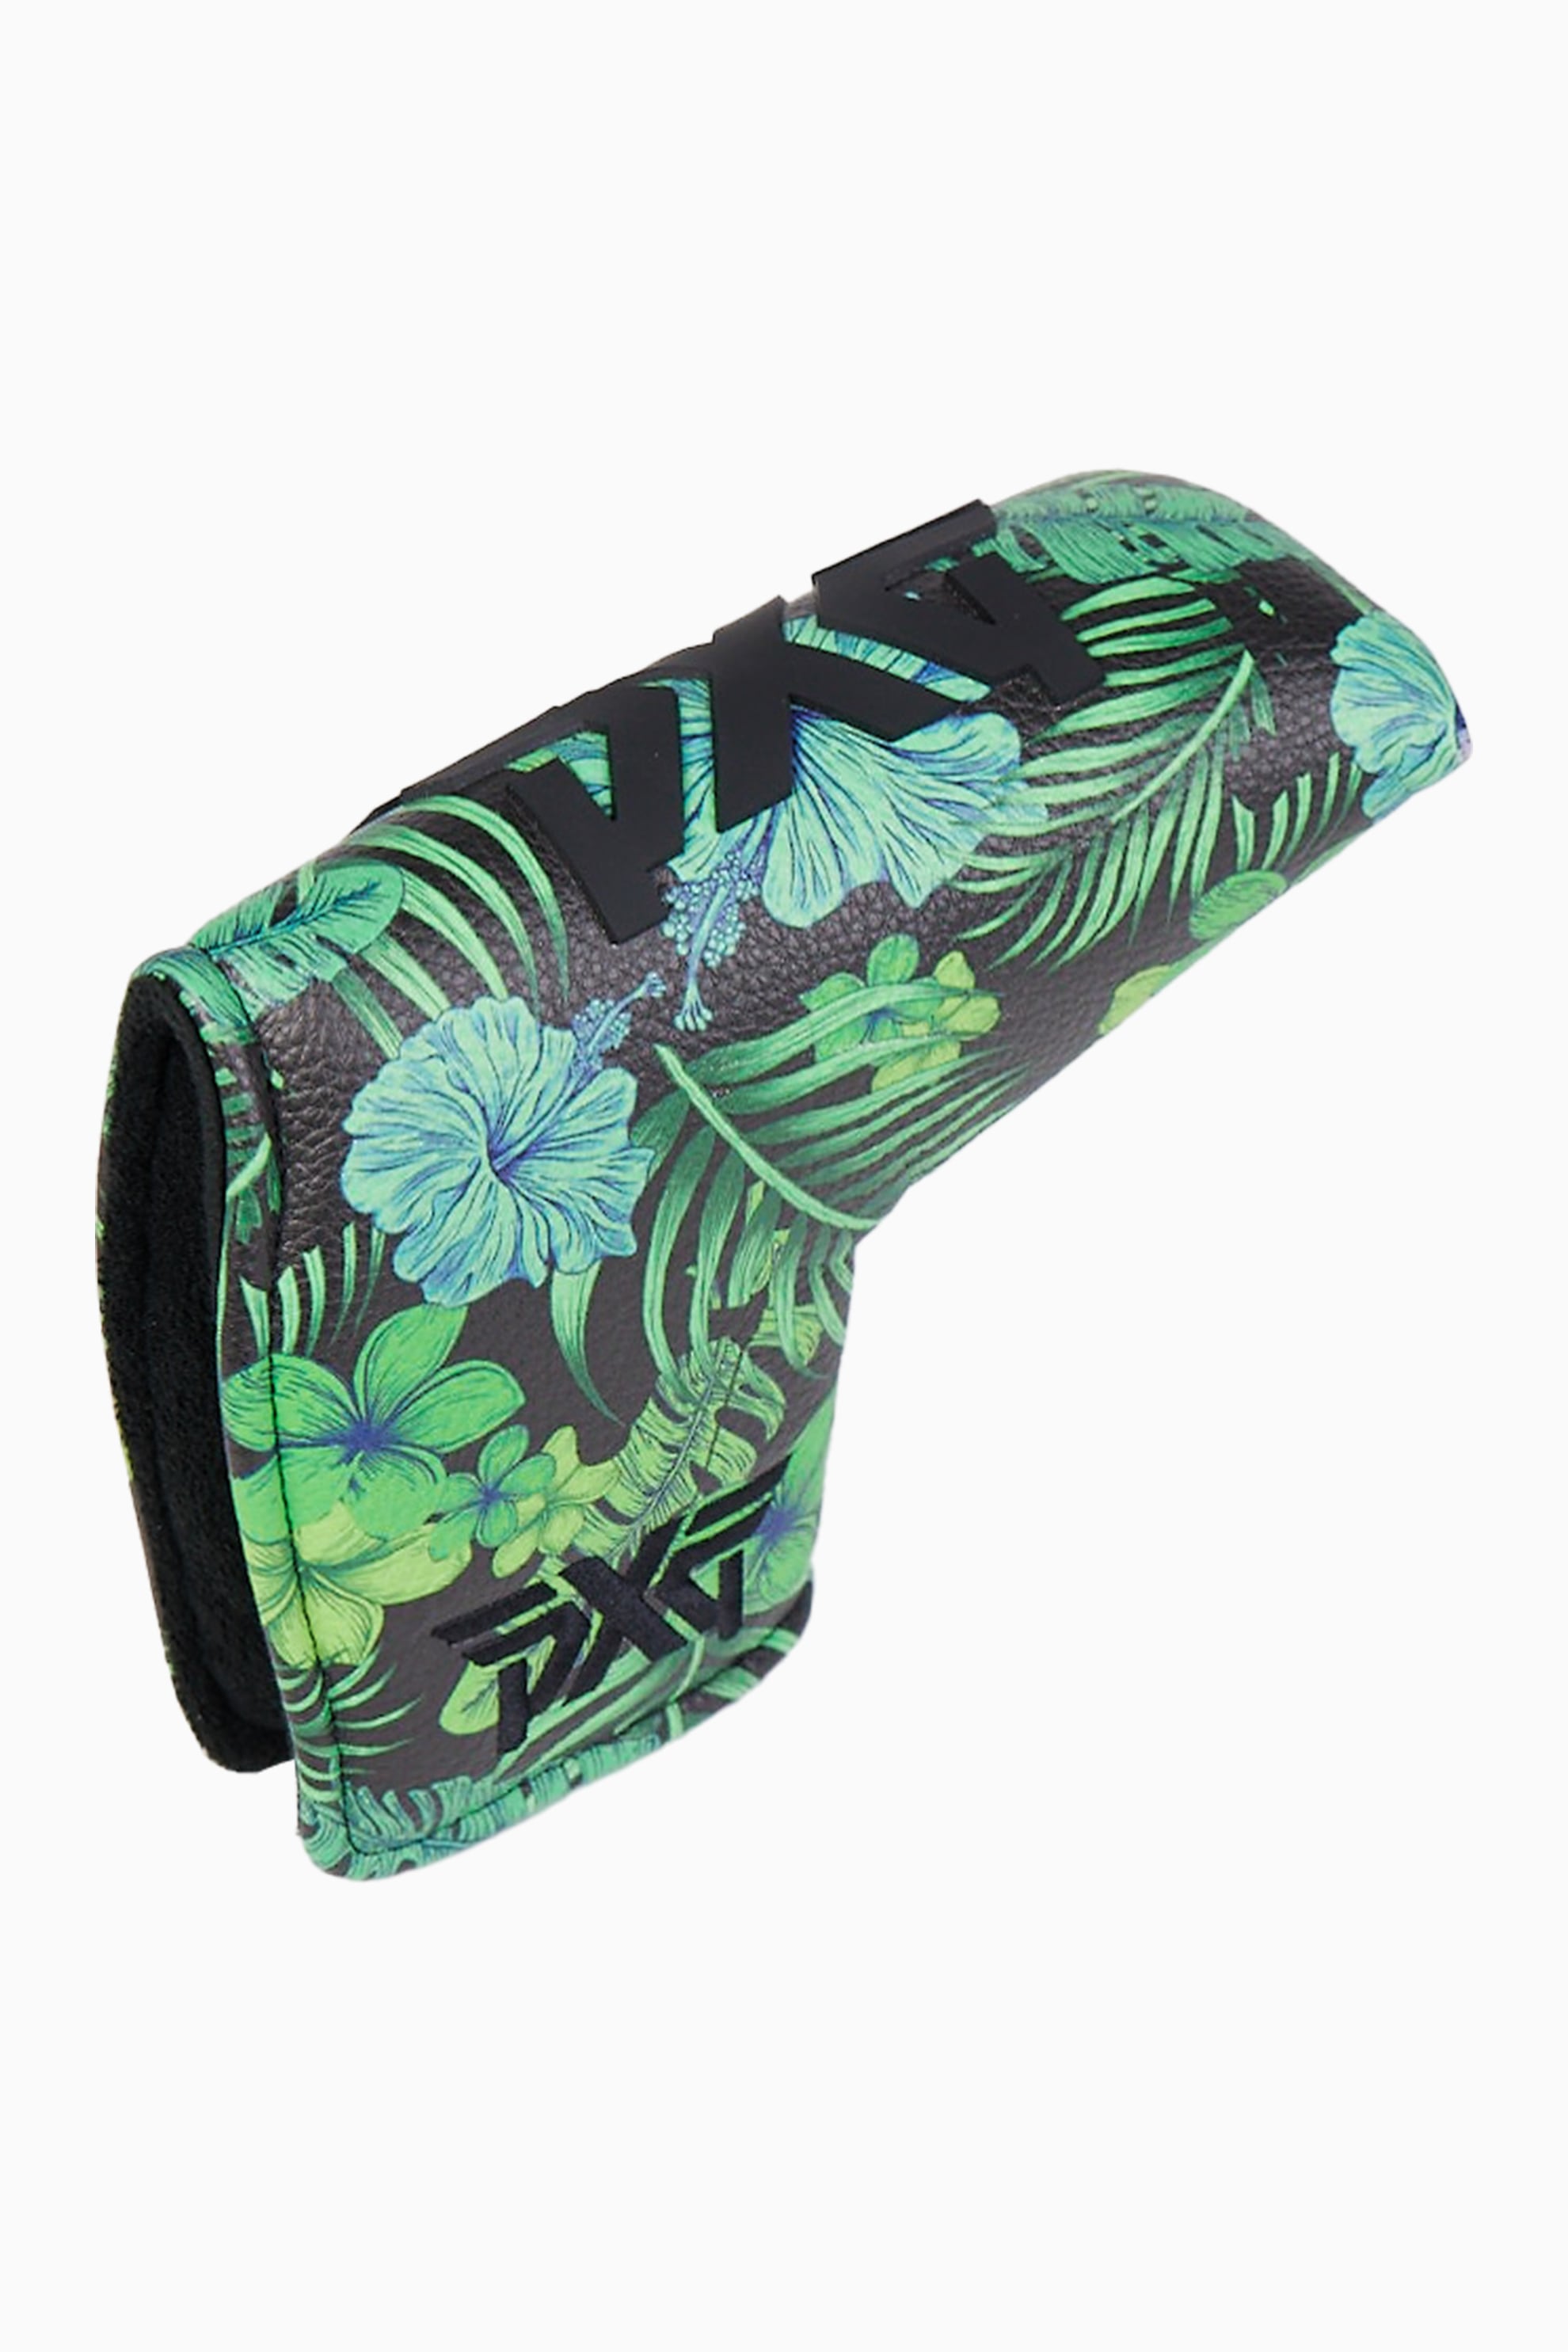 Buy Aloha 23 Blade Putter Headcover | PXG